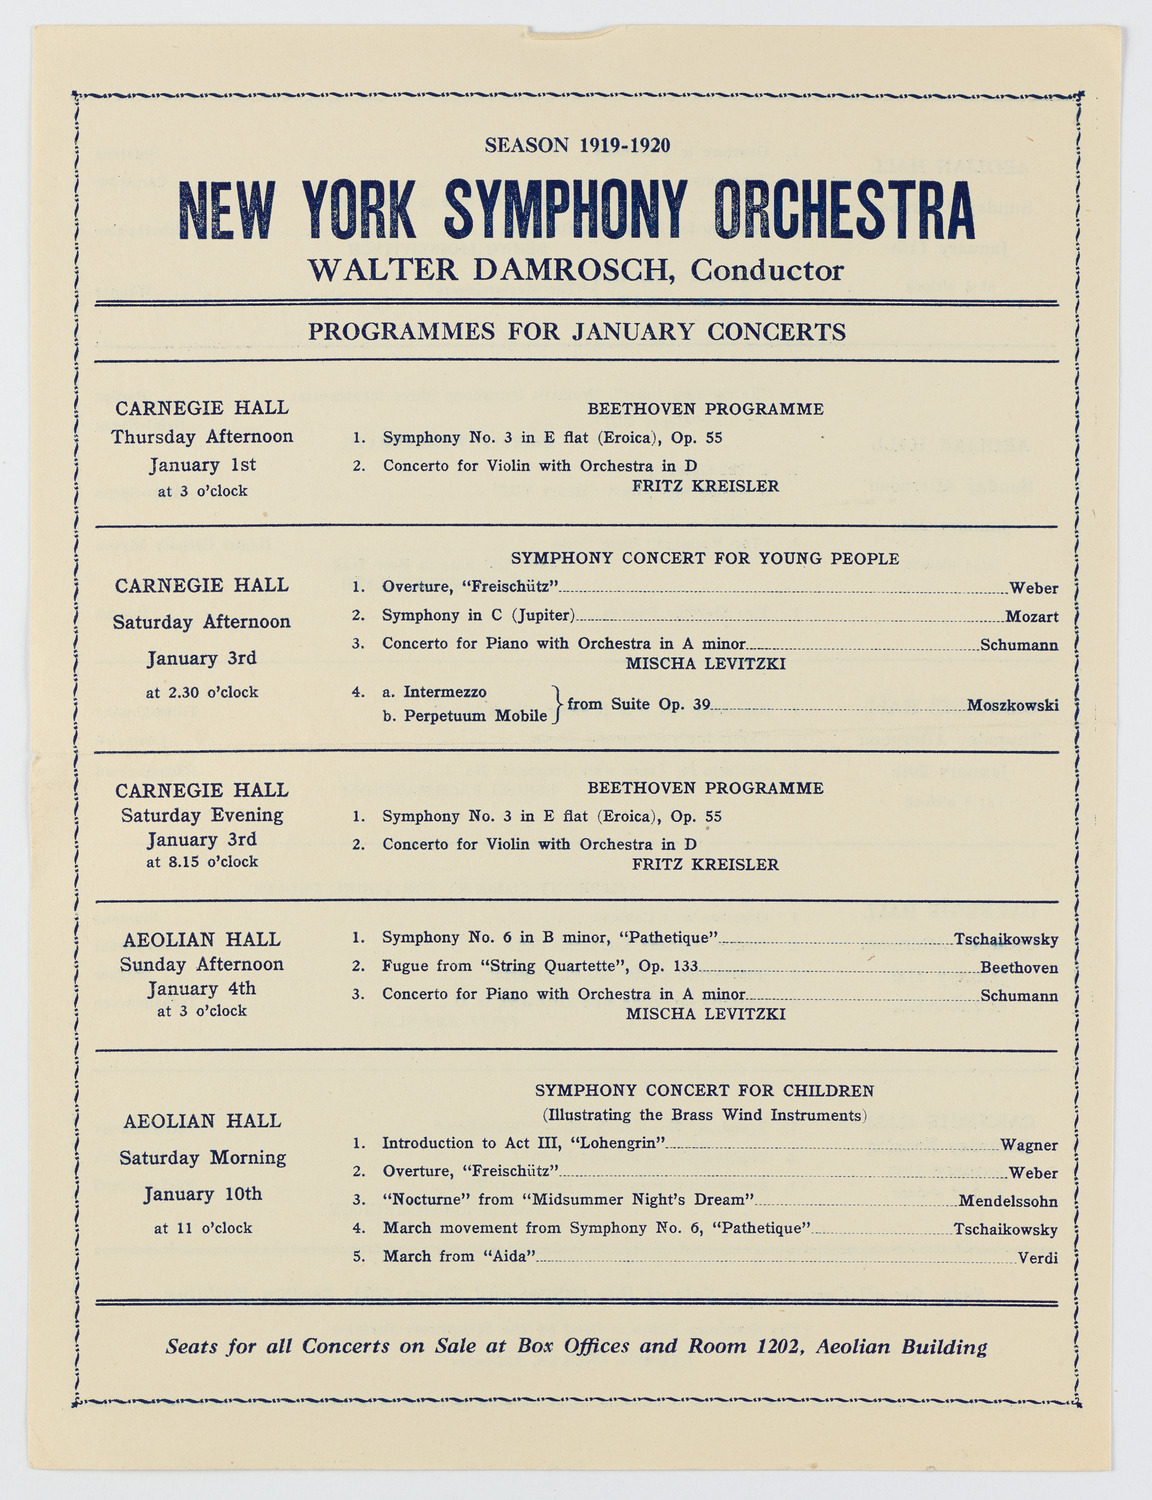 New York Symphony Orchestra, January 1920